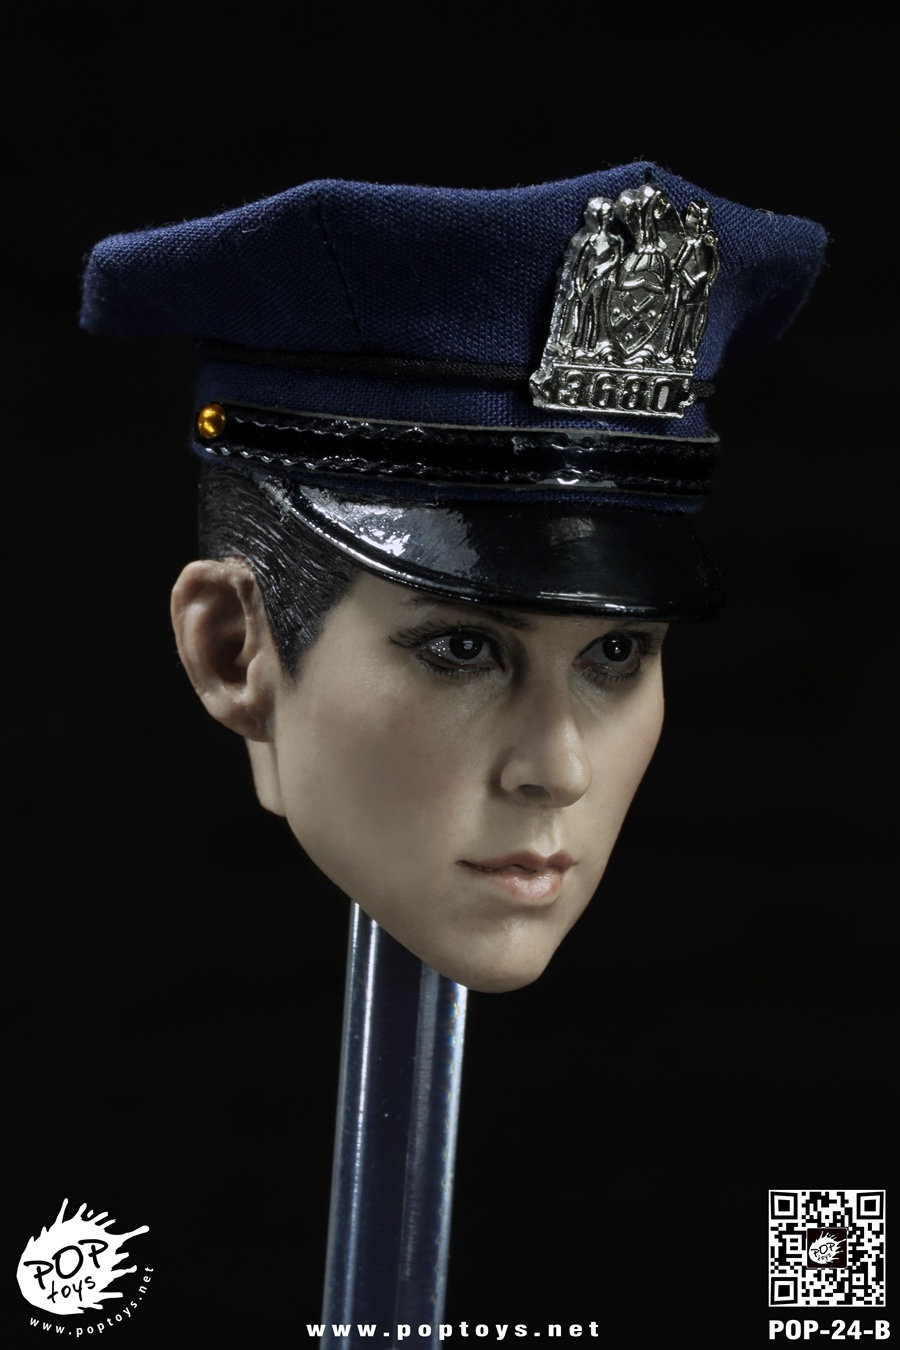 POPTOYS - NYPD POLICEWOMAN (F24) Nhge